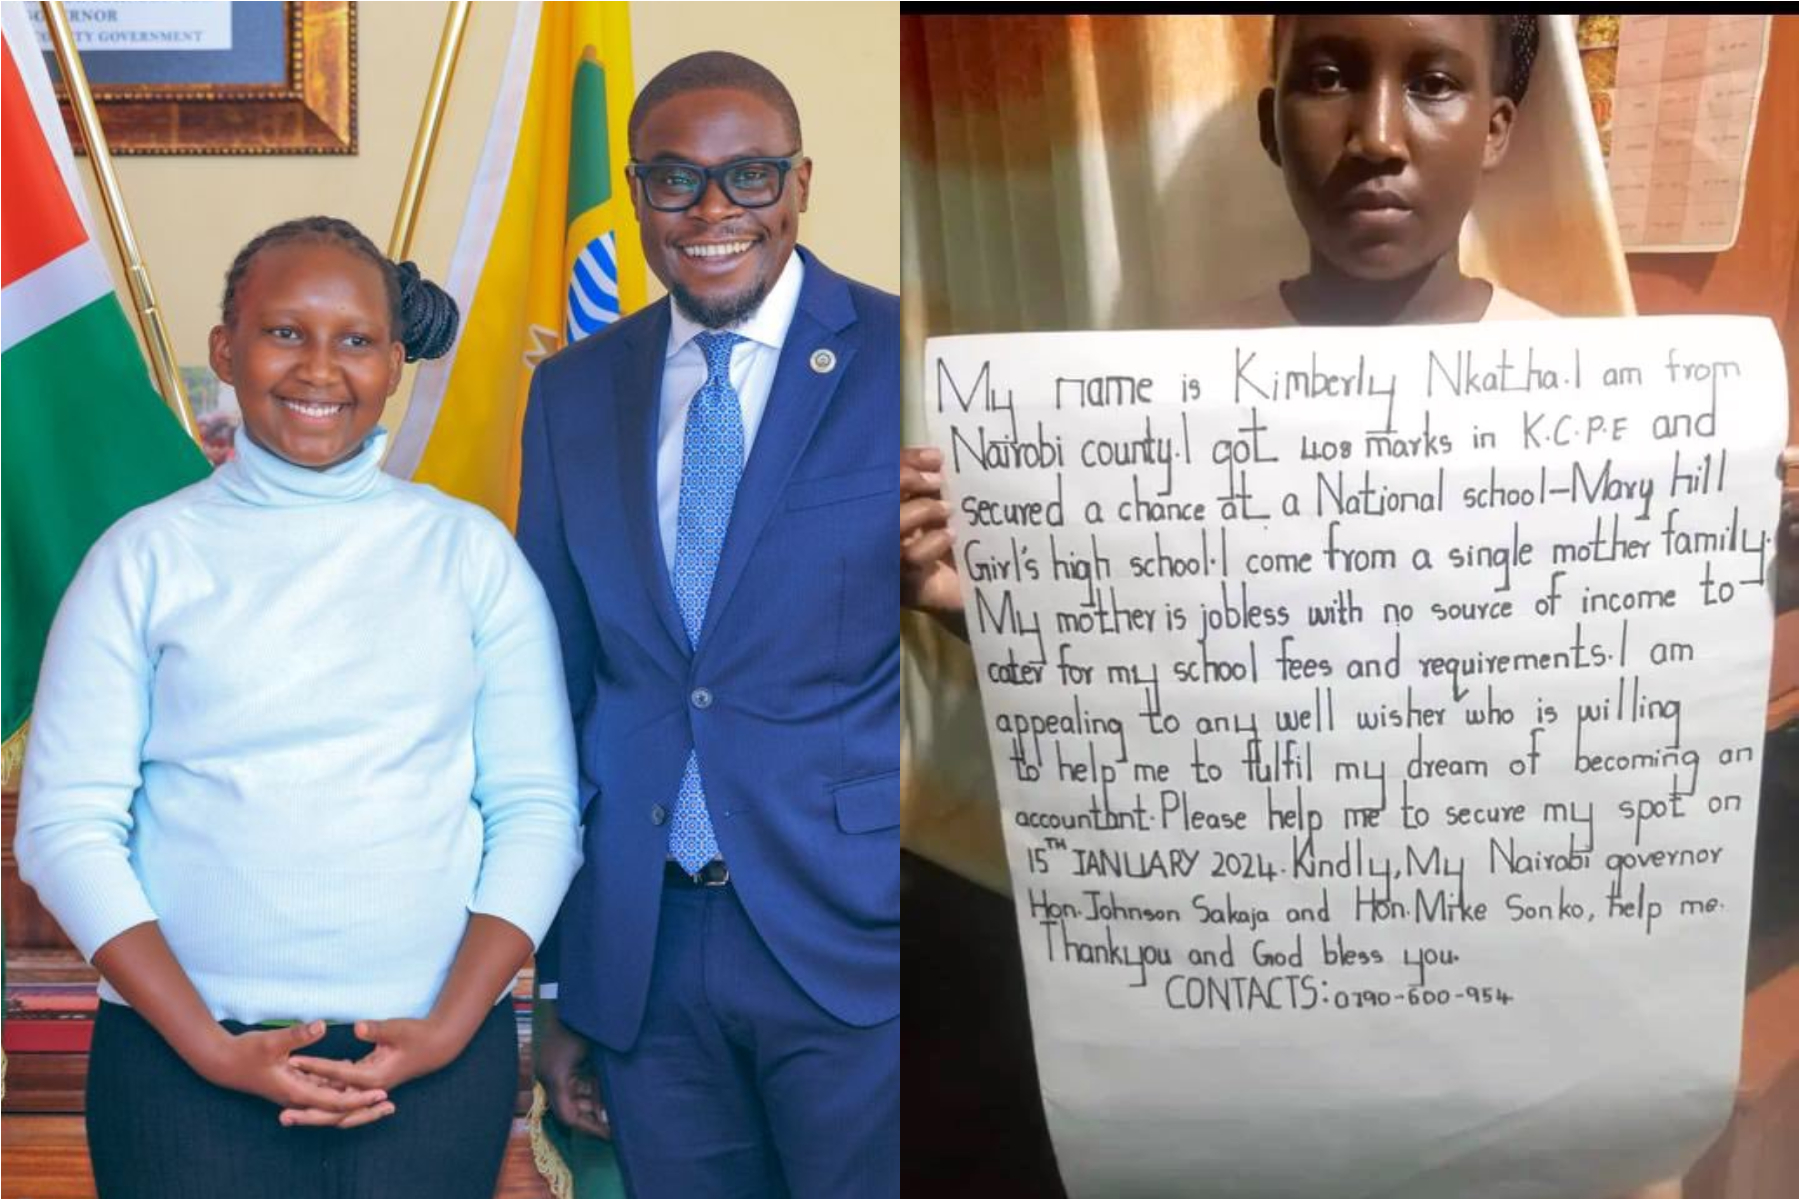 Photo collage of Nairobi Governor Johnson Sakaja with Kimberly Nkatha.